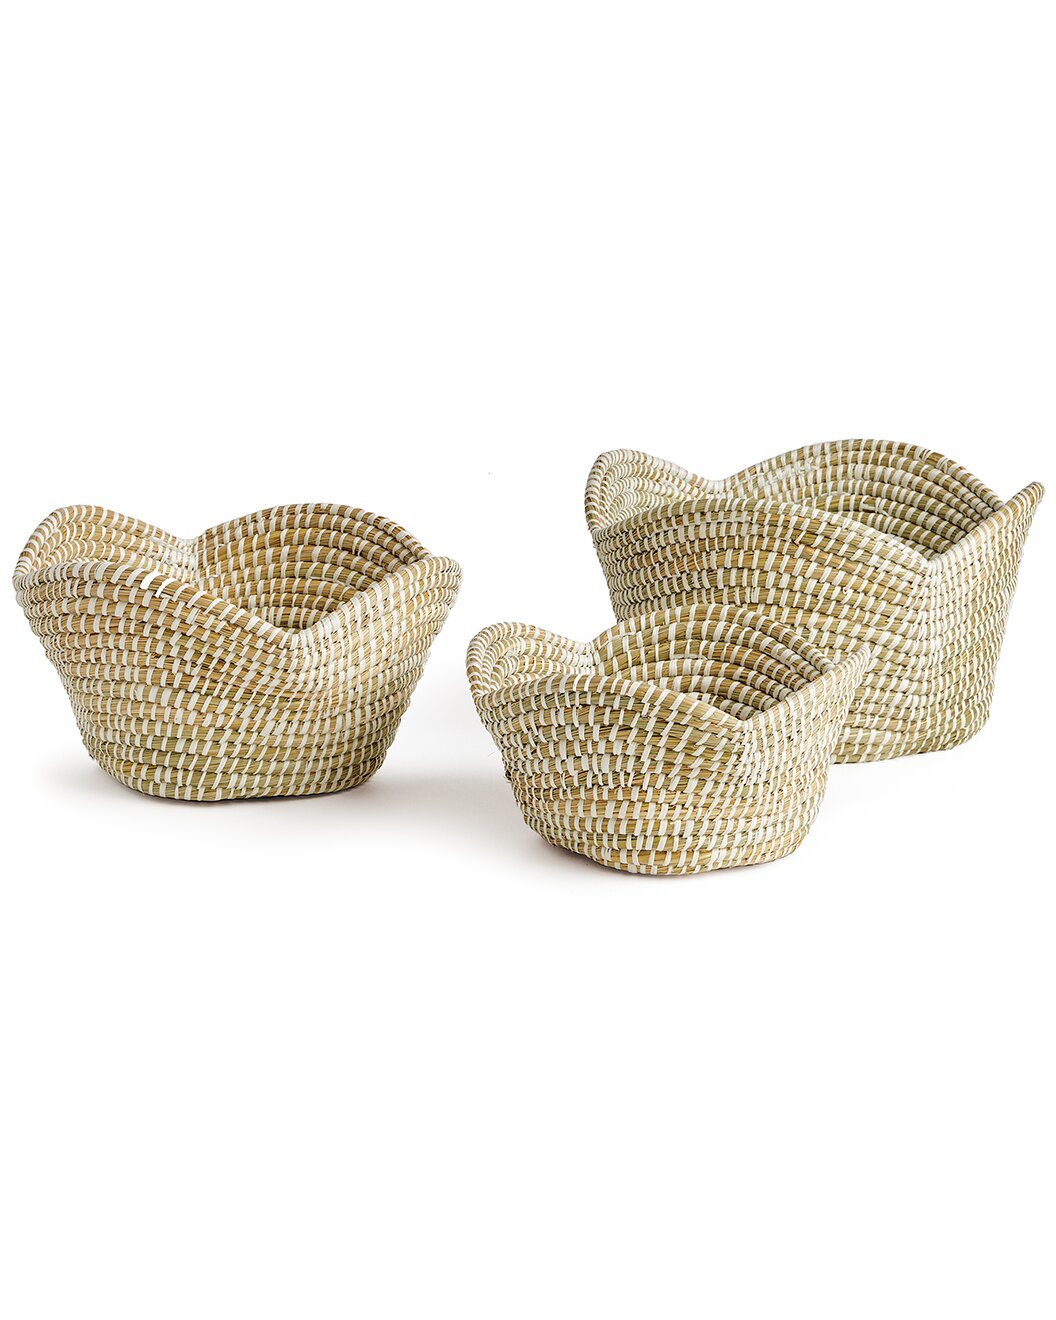 Rivergrass Lotus Baskets - (three sizes)